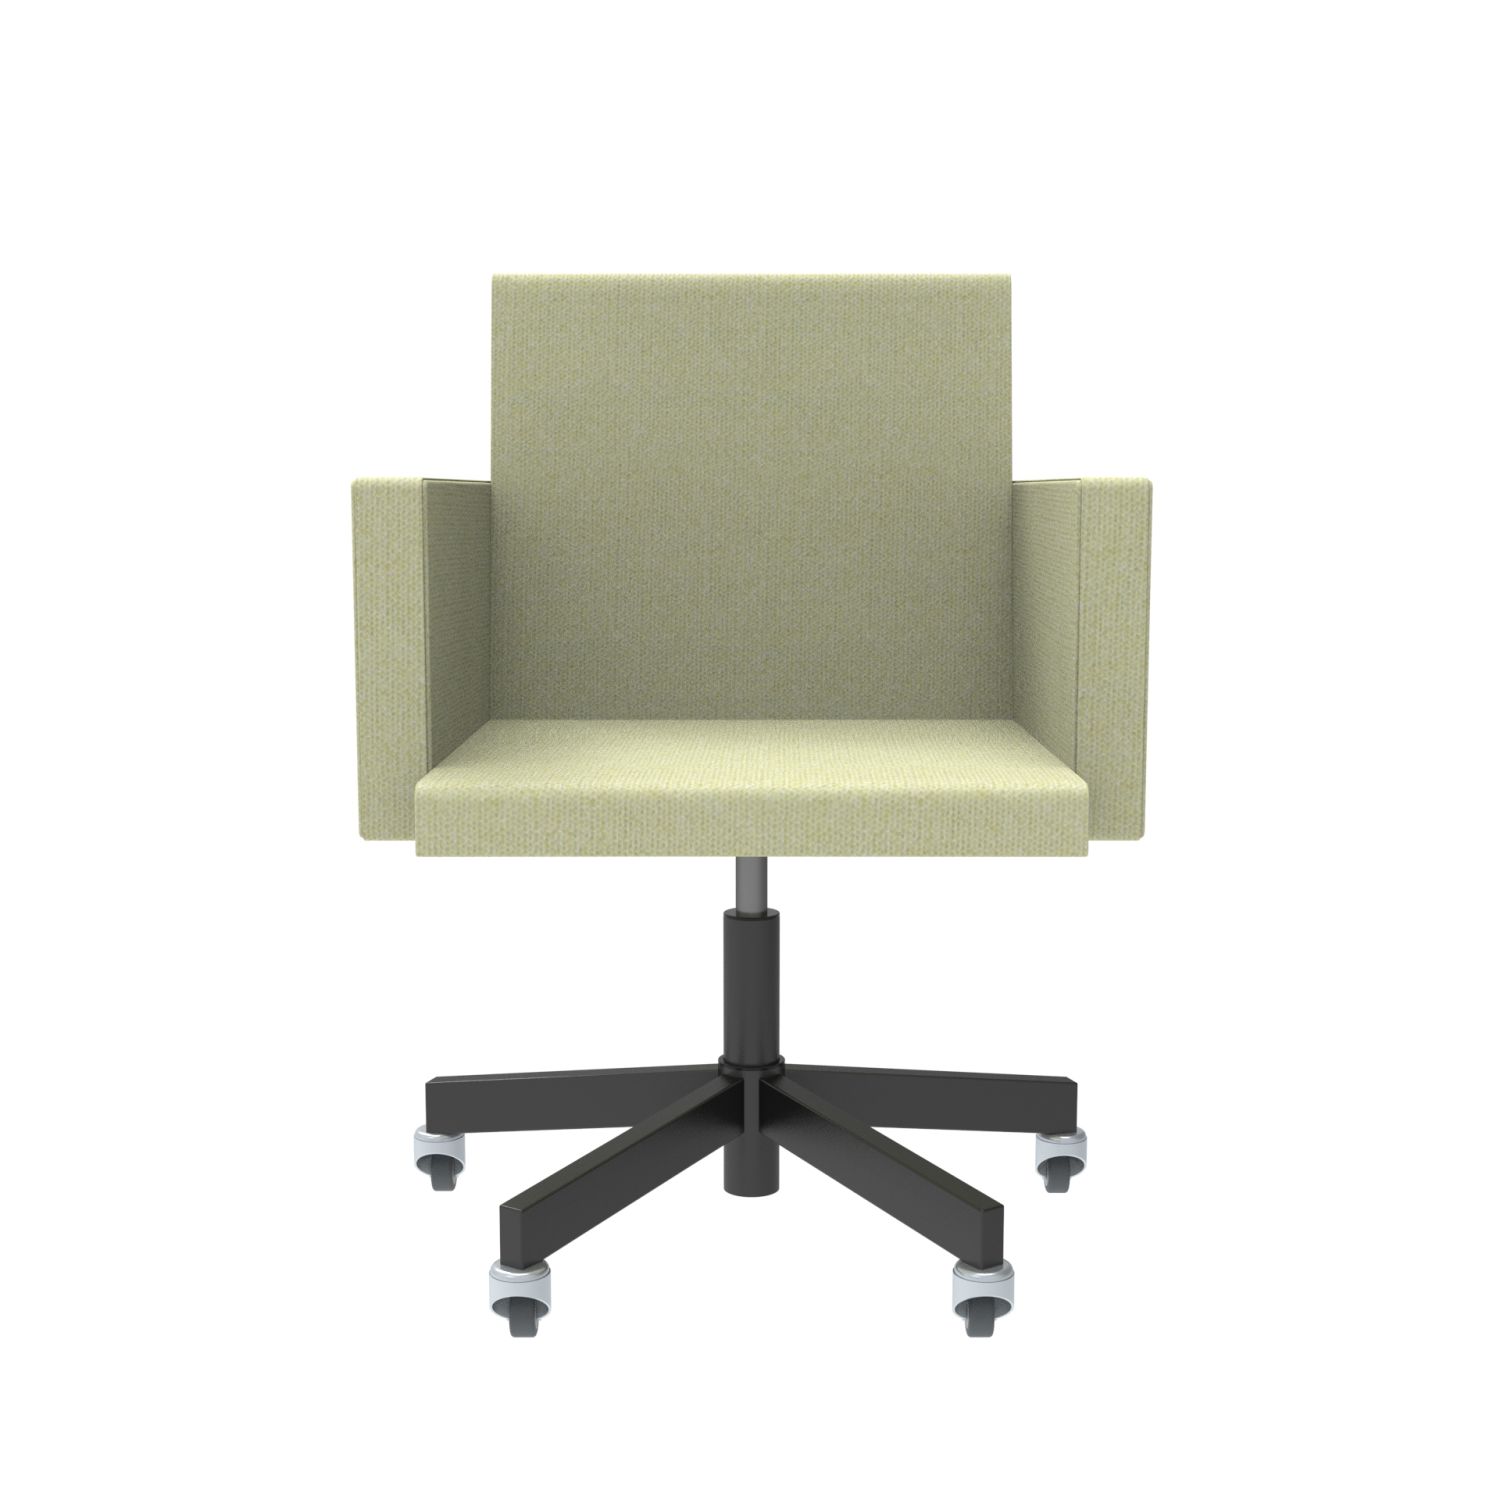 lensvelt atelier van lieshout office chair with armrests moss ivory 30 black ral9005 soft rolls